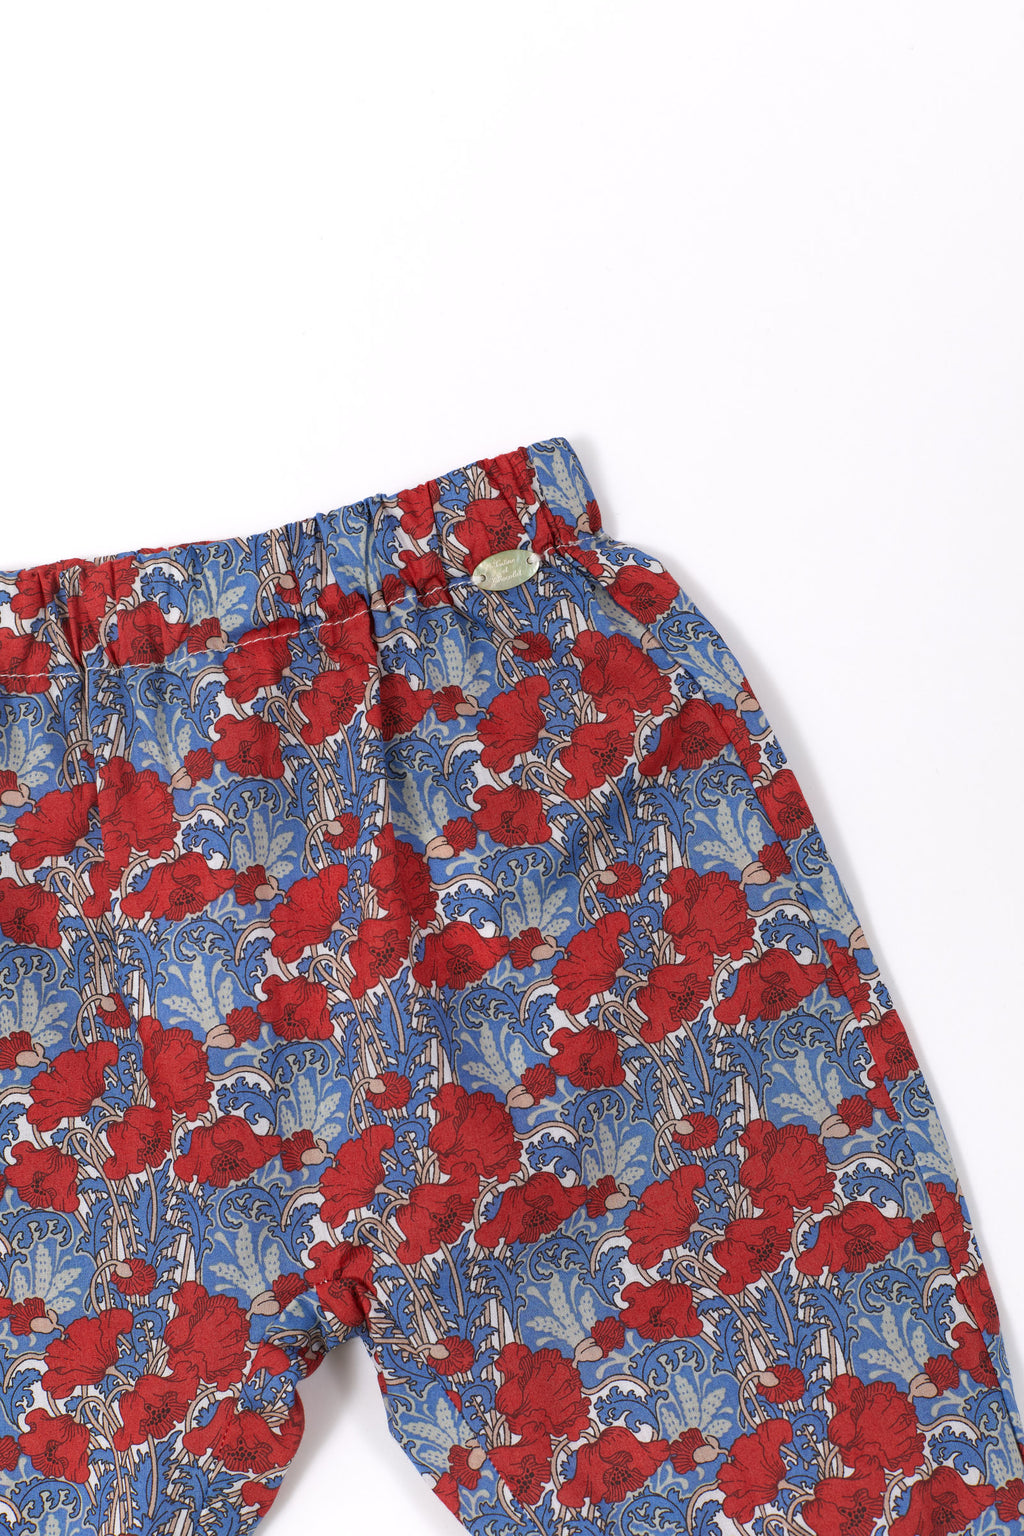 Trousers - Fabric Liberty poppy